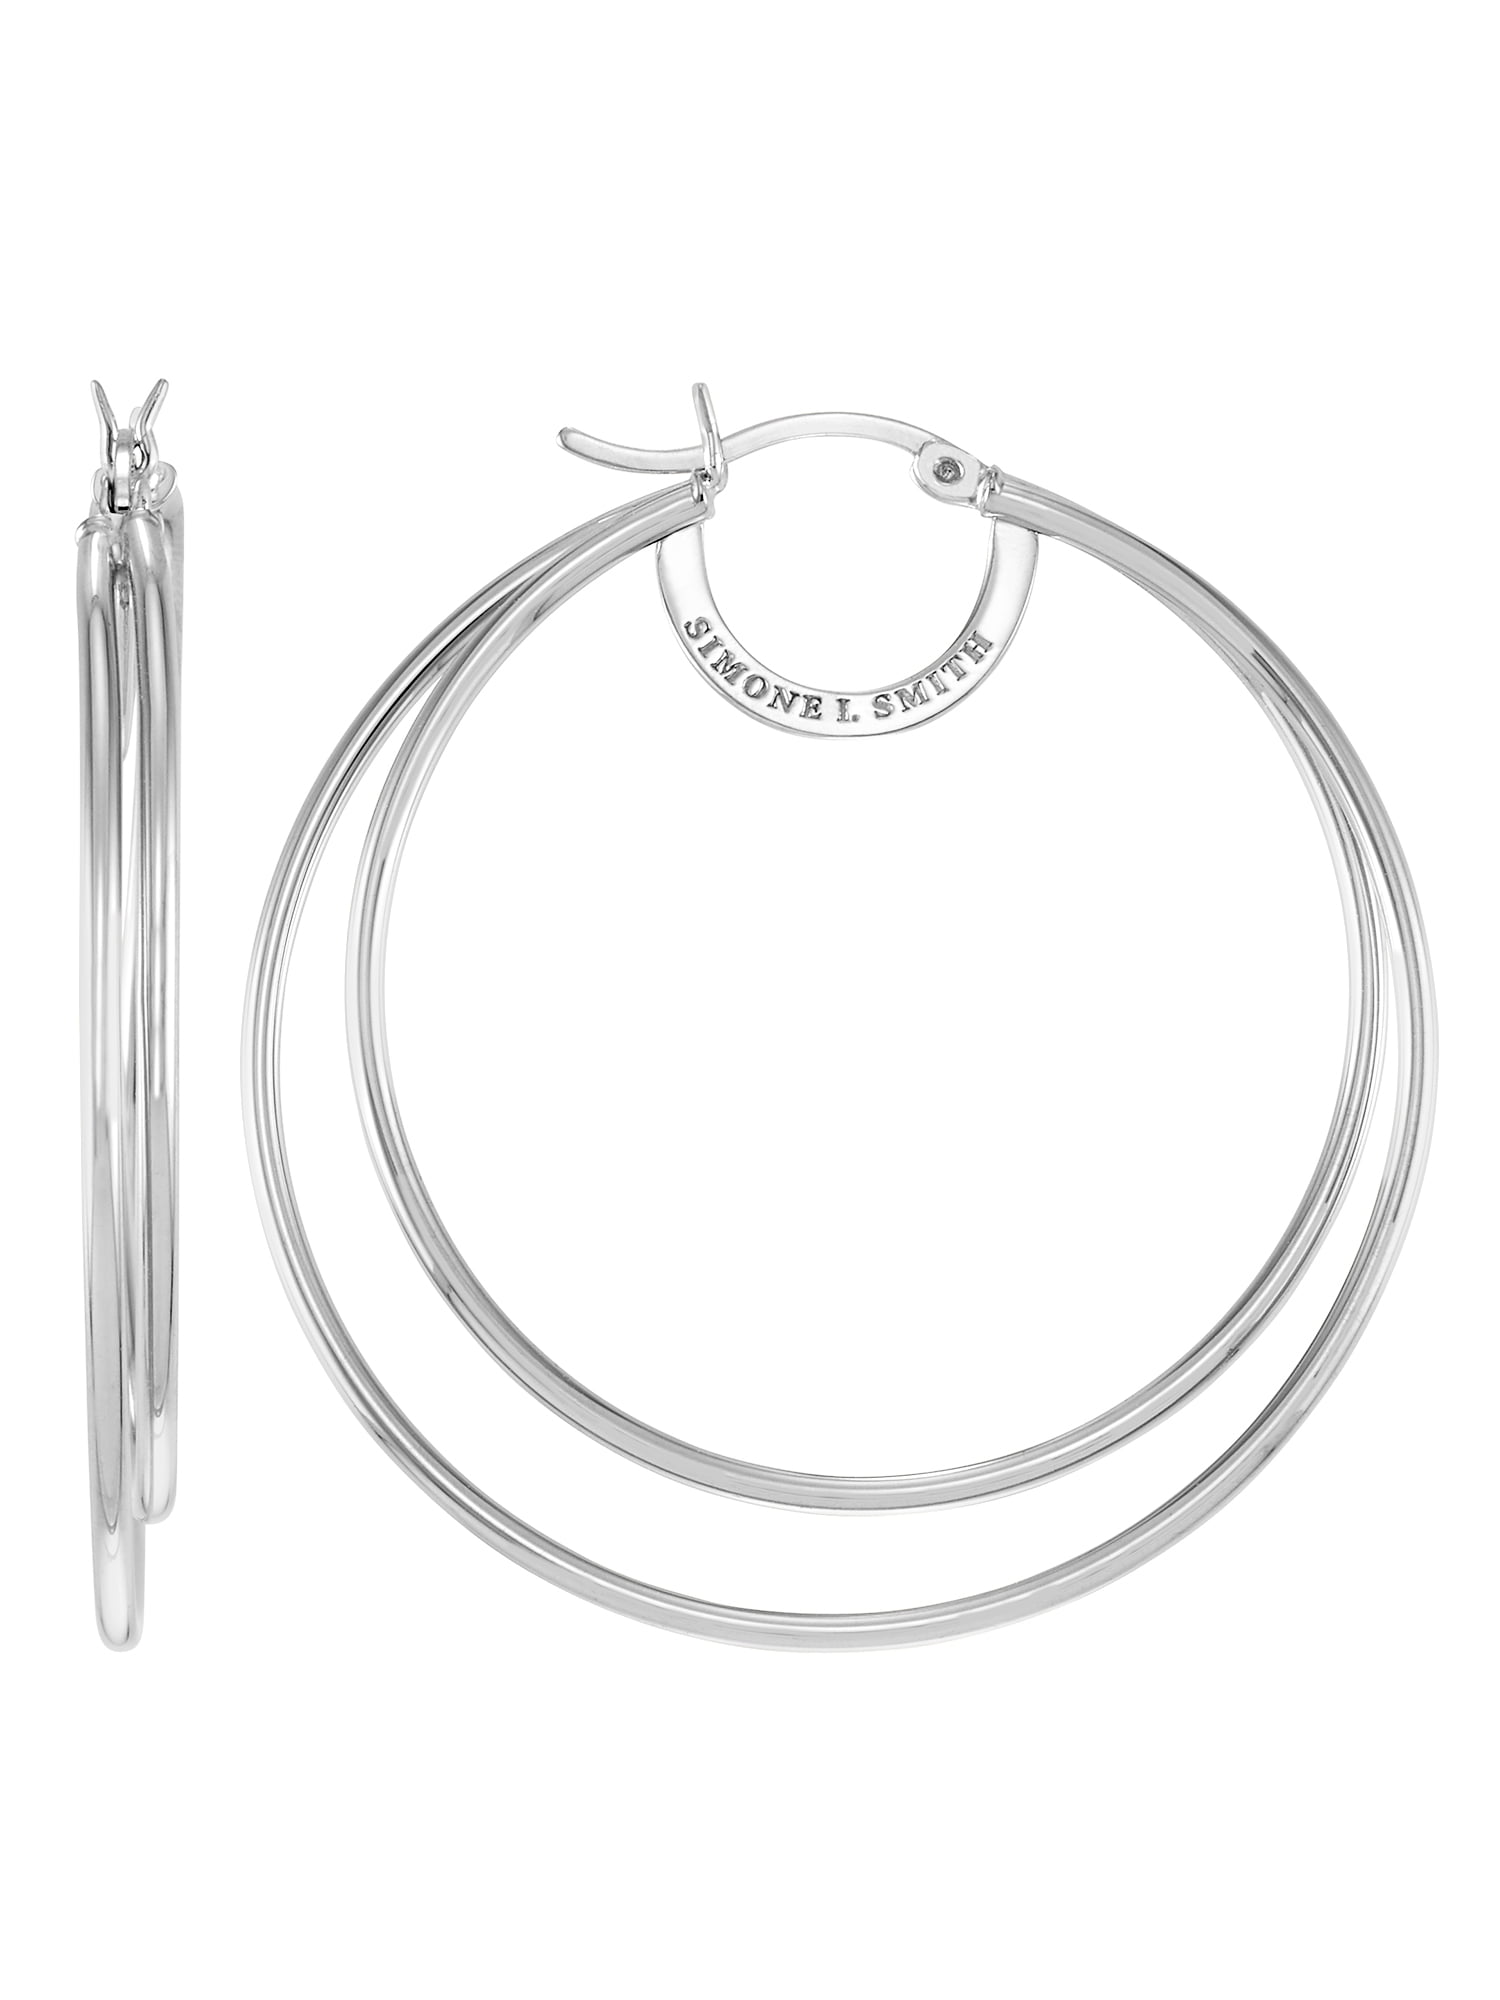 Rhinestone Pave Crystal Hoop Earrings Silver tone 2 inch Diameter 0.60 inch thick